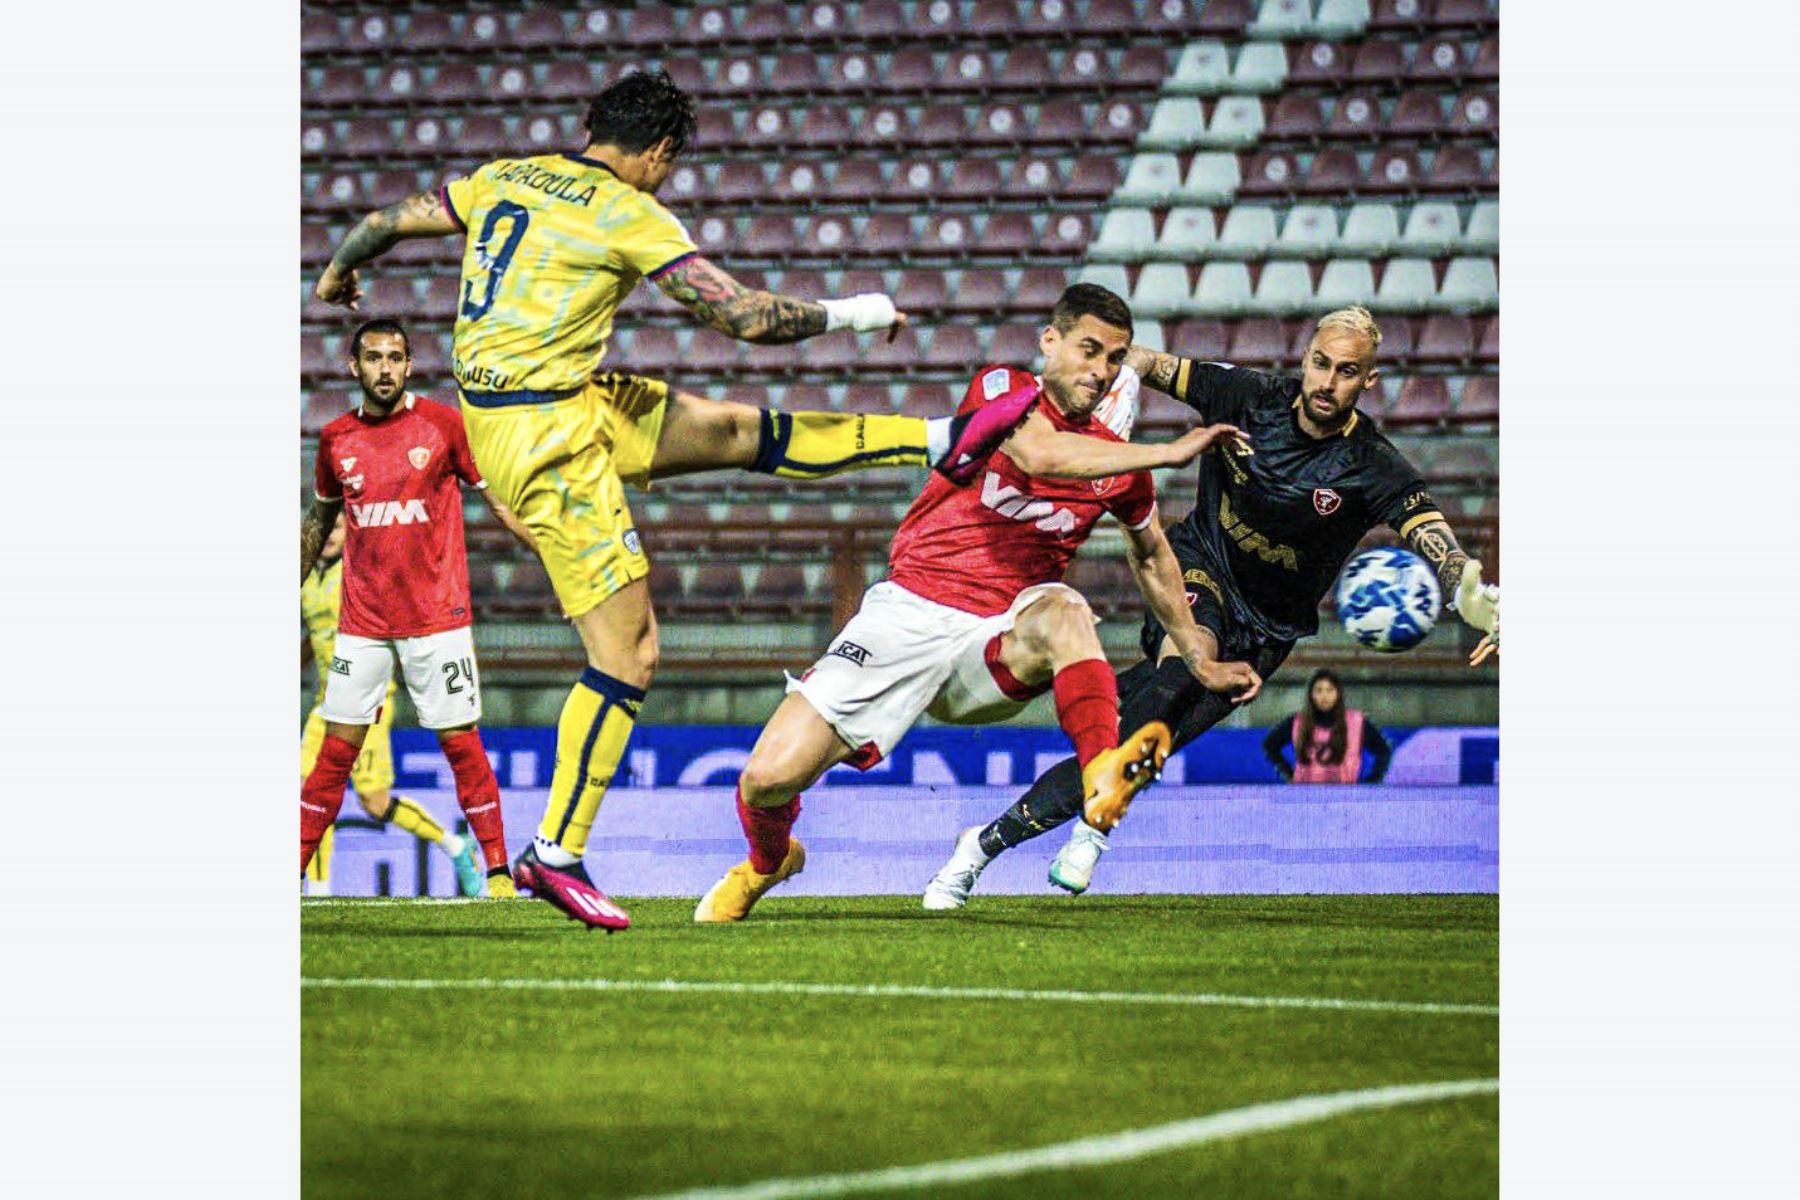 Con dos goles del peruano Gianluca Lapadula, Cagliari venció por 5-0 al Perugia, por la fecha 36 de la Serie B de Italia. Foto:Internet/Medios